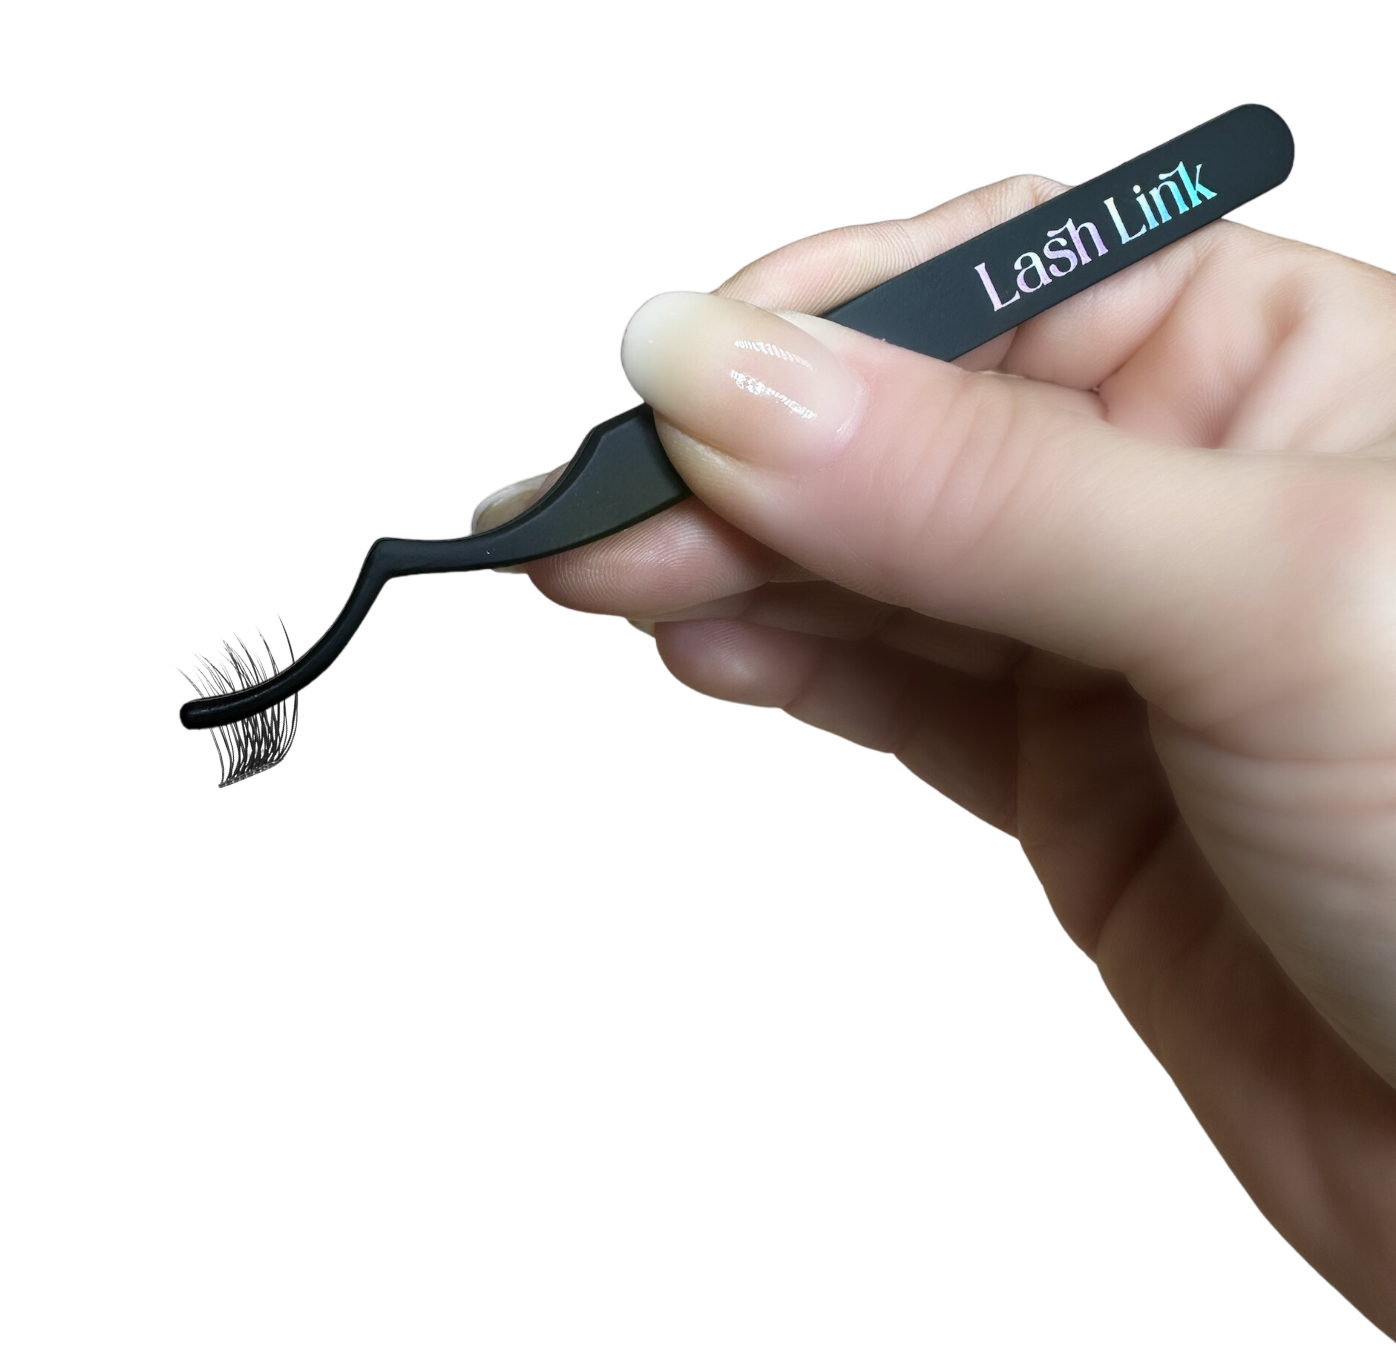 lash linnk applicator tweezers holding a lash segment